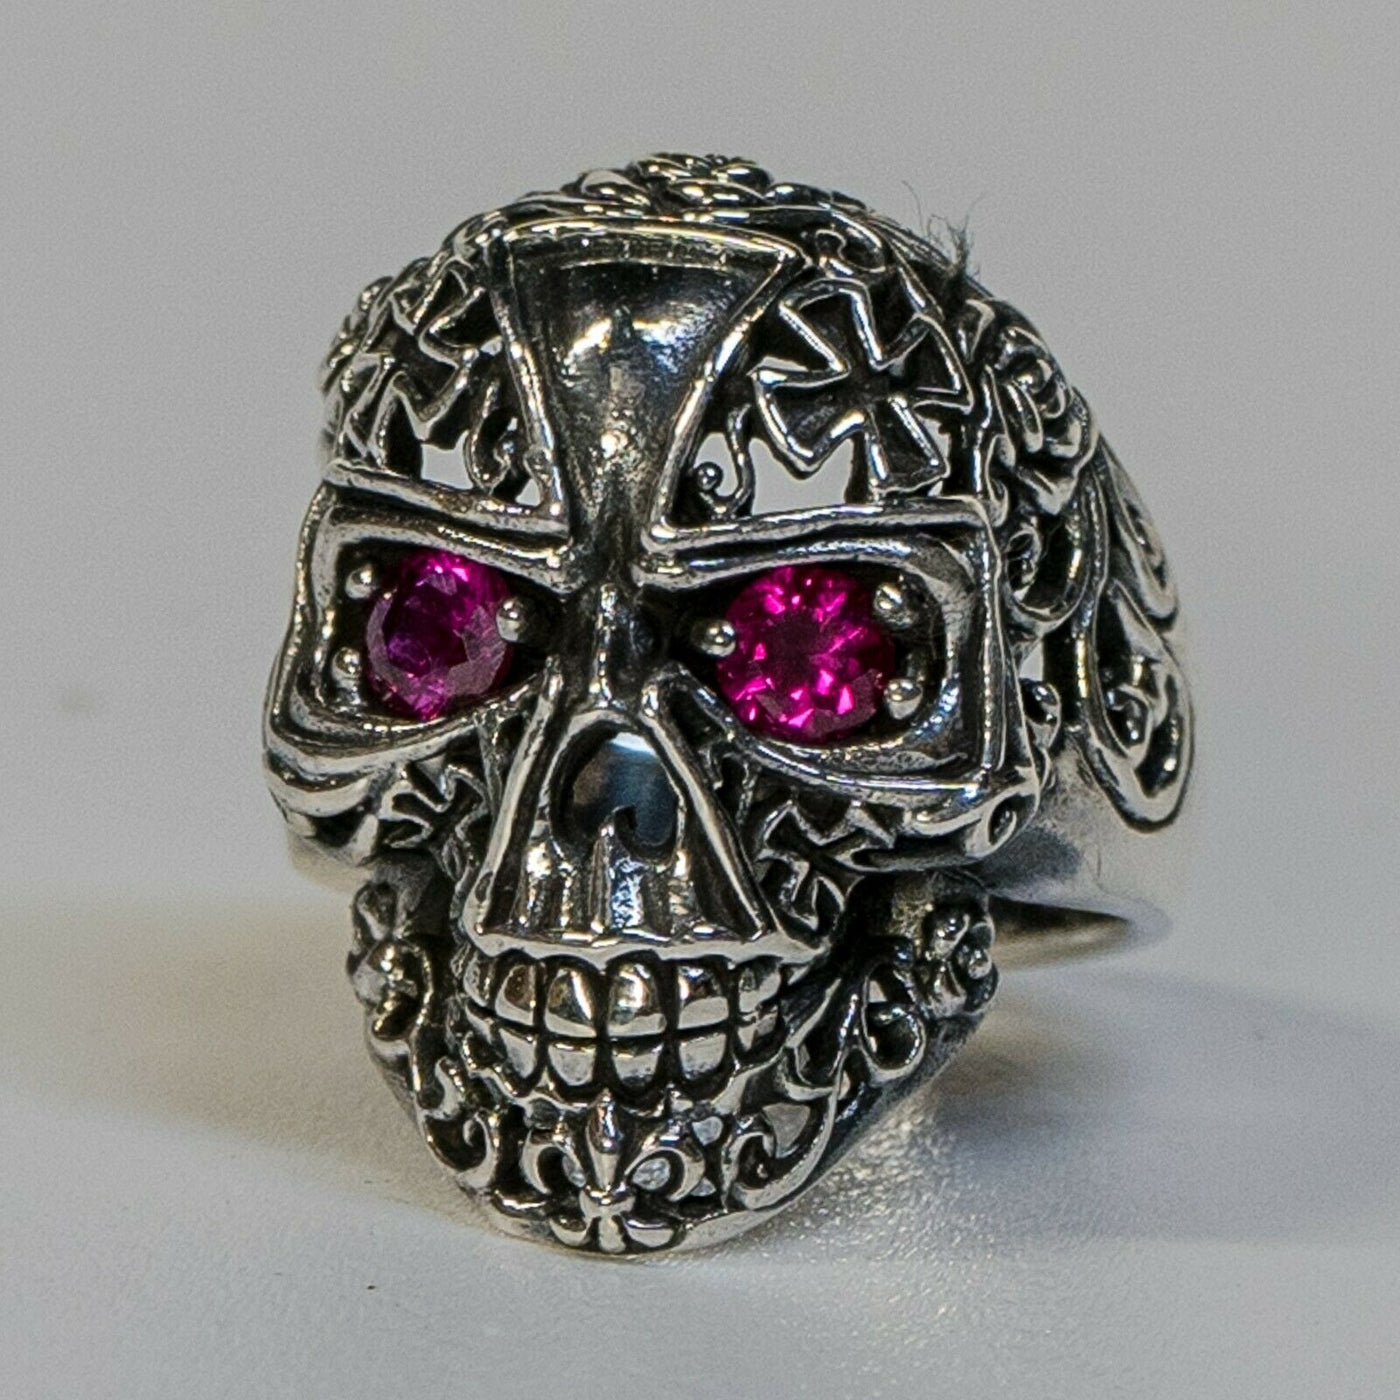 Iron Cross Skull Ring .925 Sterling Silver